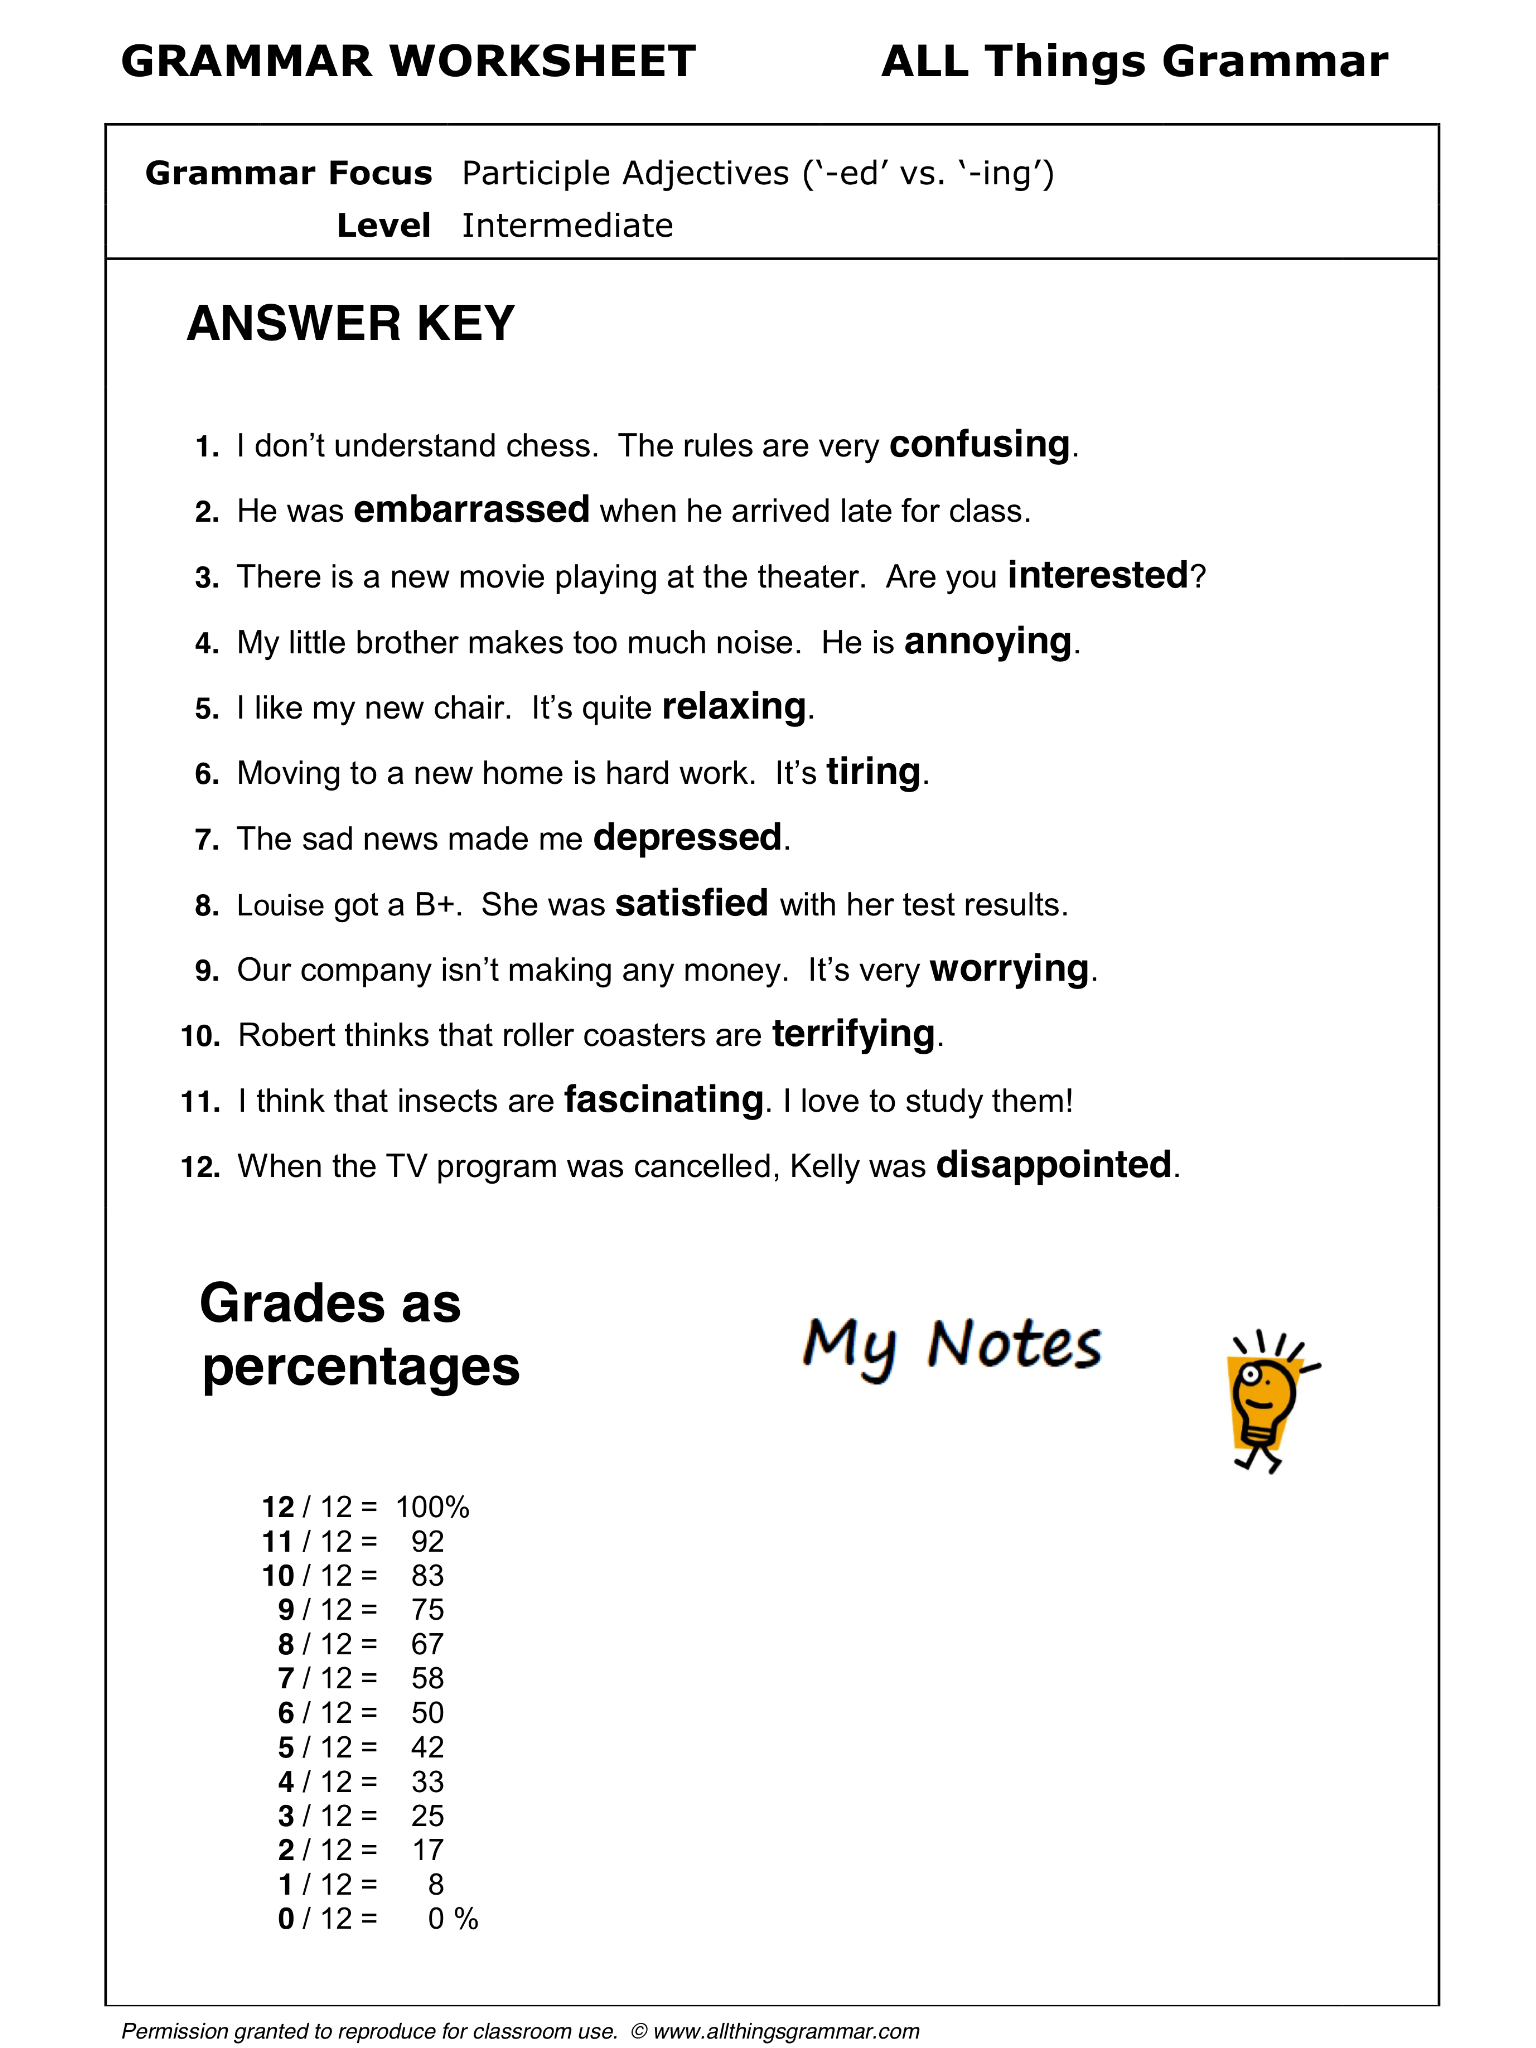 English Grammar Worksheet With Answer